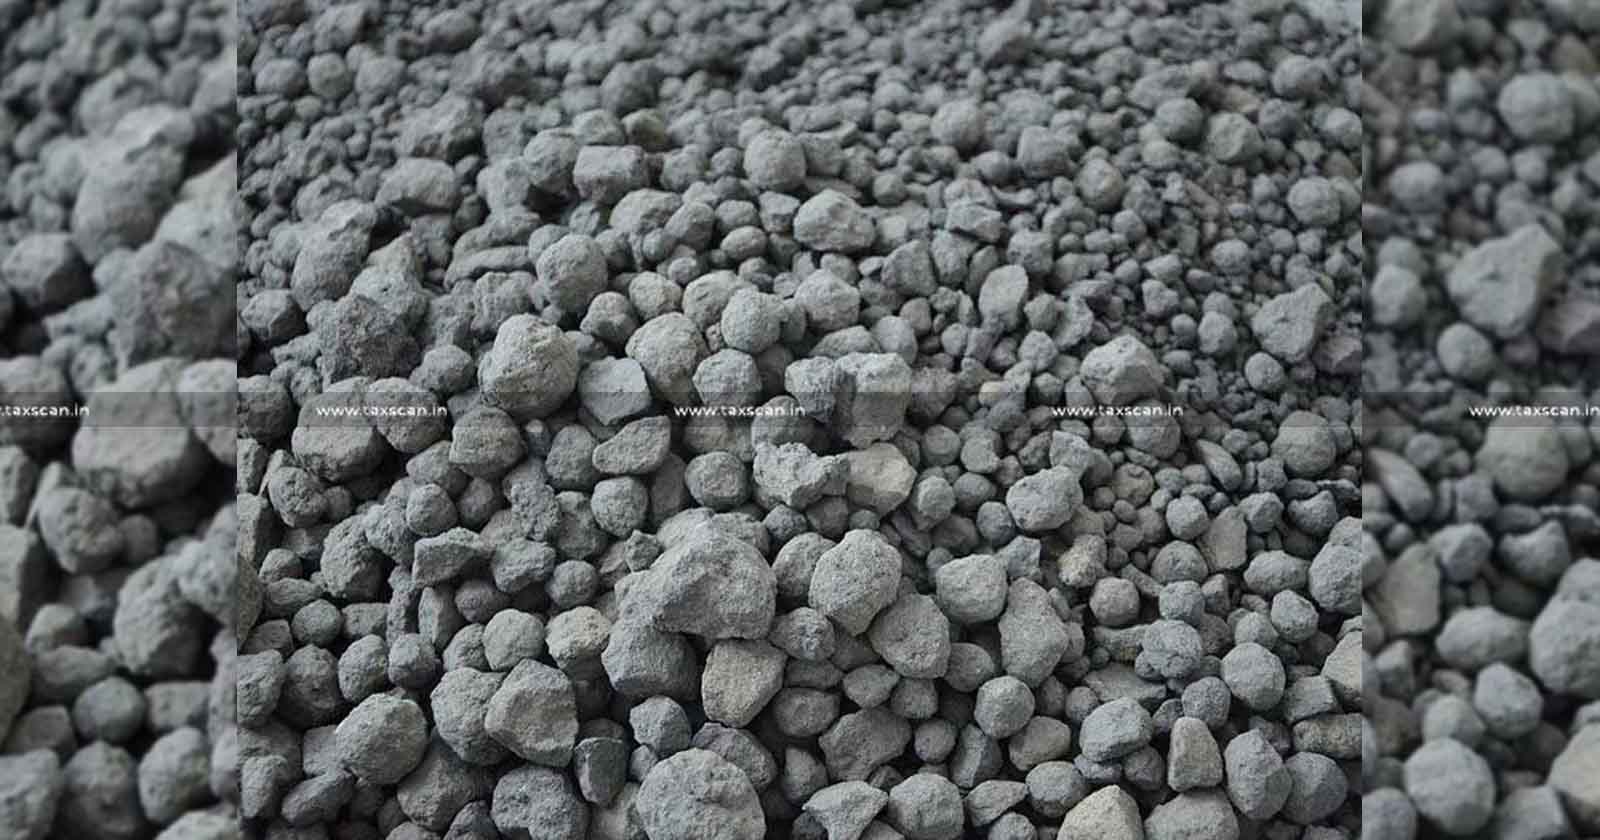 production - Cement - Clinker - Business - VAT - Madhya Pradesh HC - taxscan